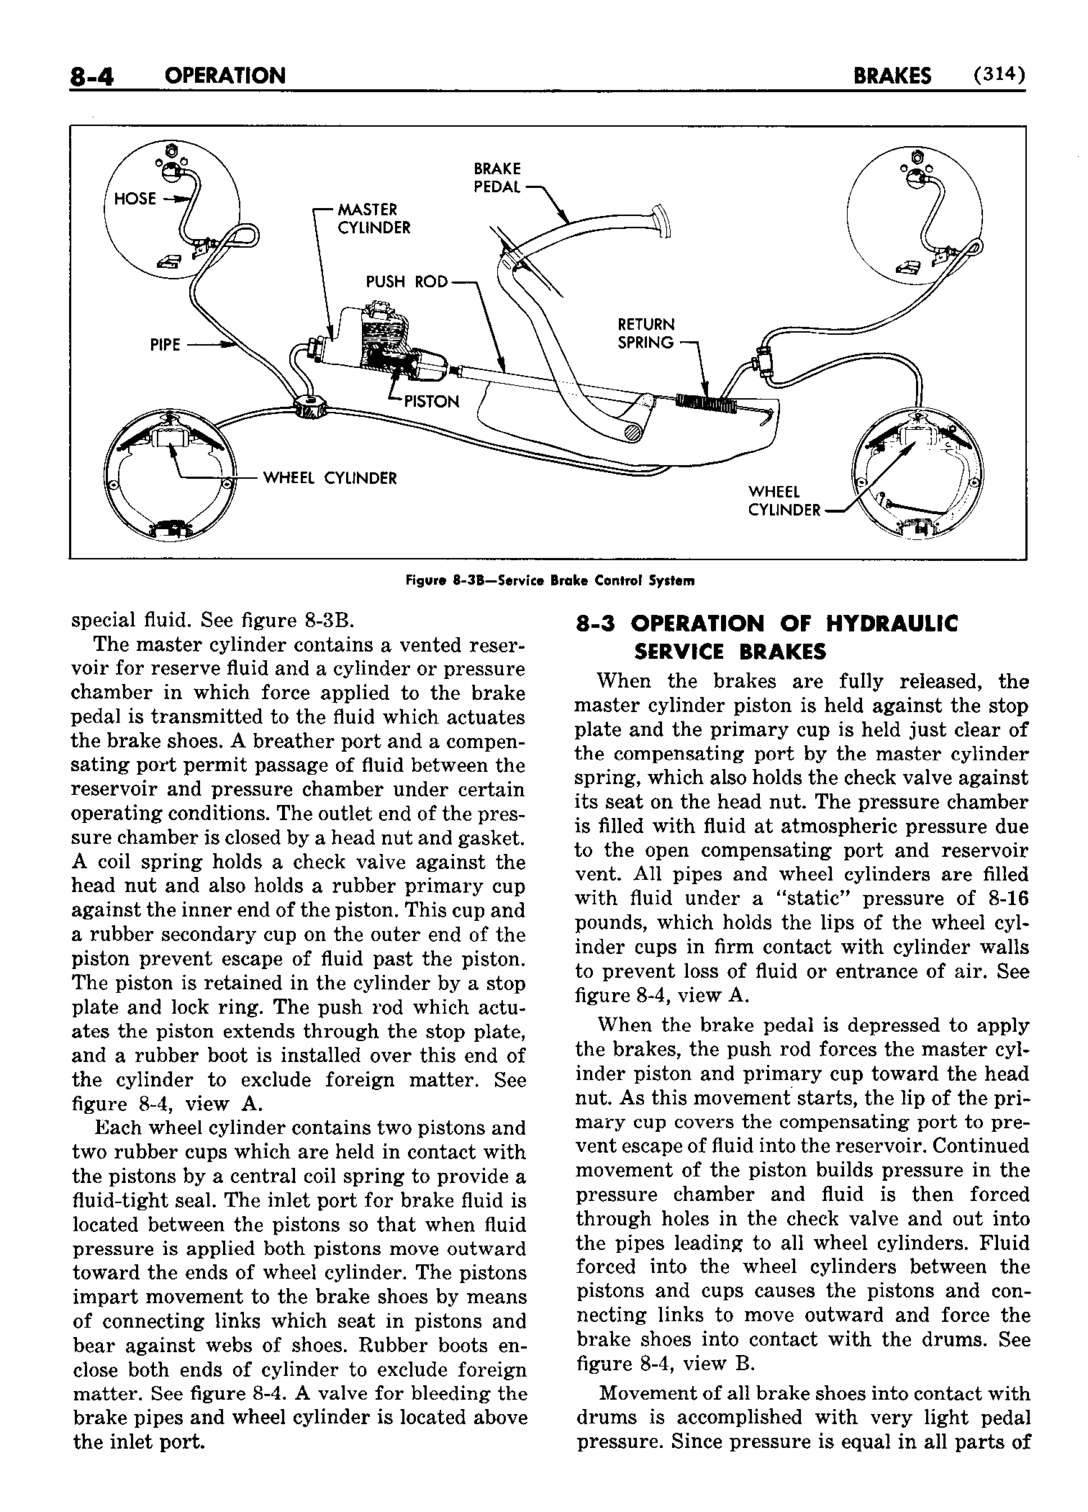 n_09 1952 Buick Shop Manual - Brakes-004-004.jpg